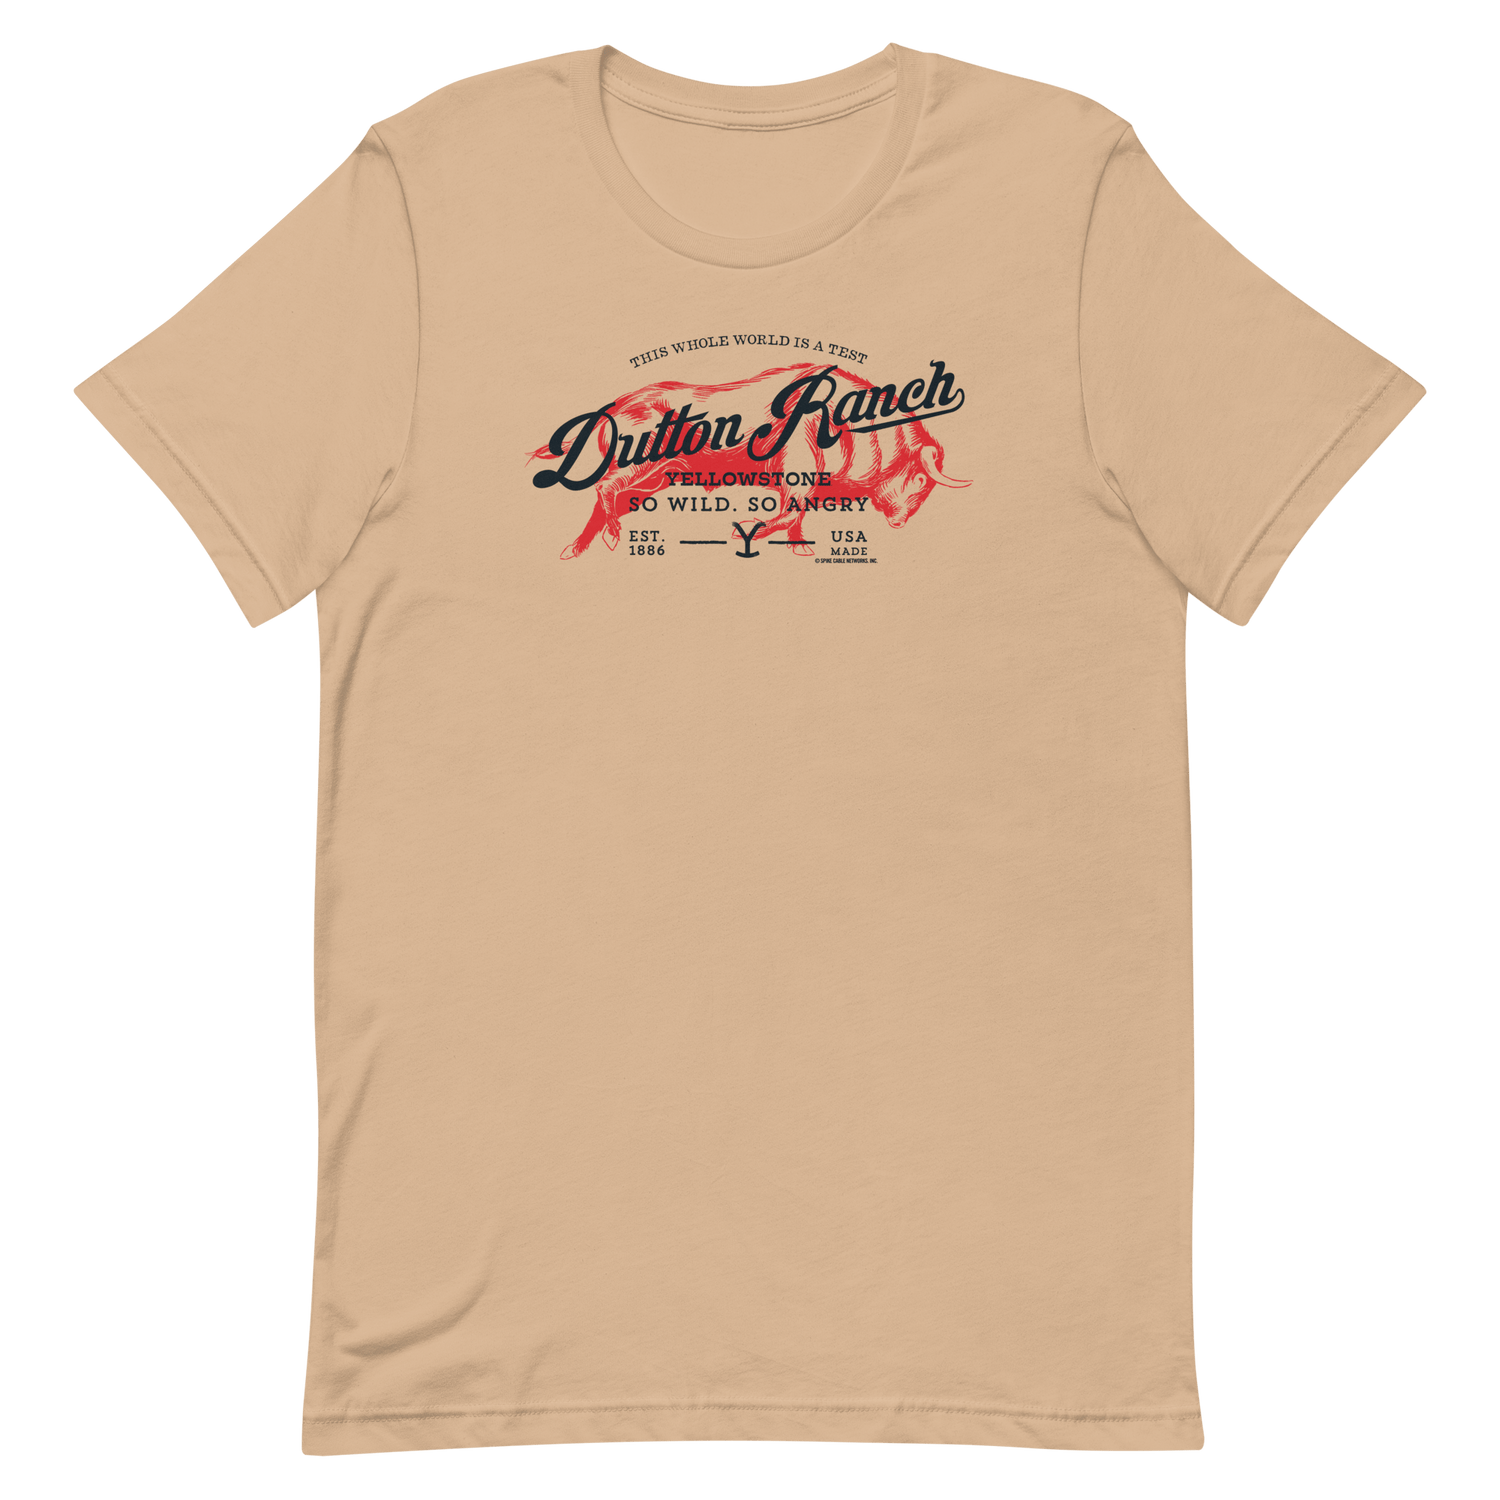 Yellowstone Dutton Ranch So Wild So Angry Unisex Premium T - Shirt - Paramount Shop